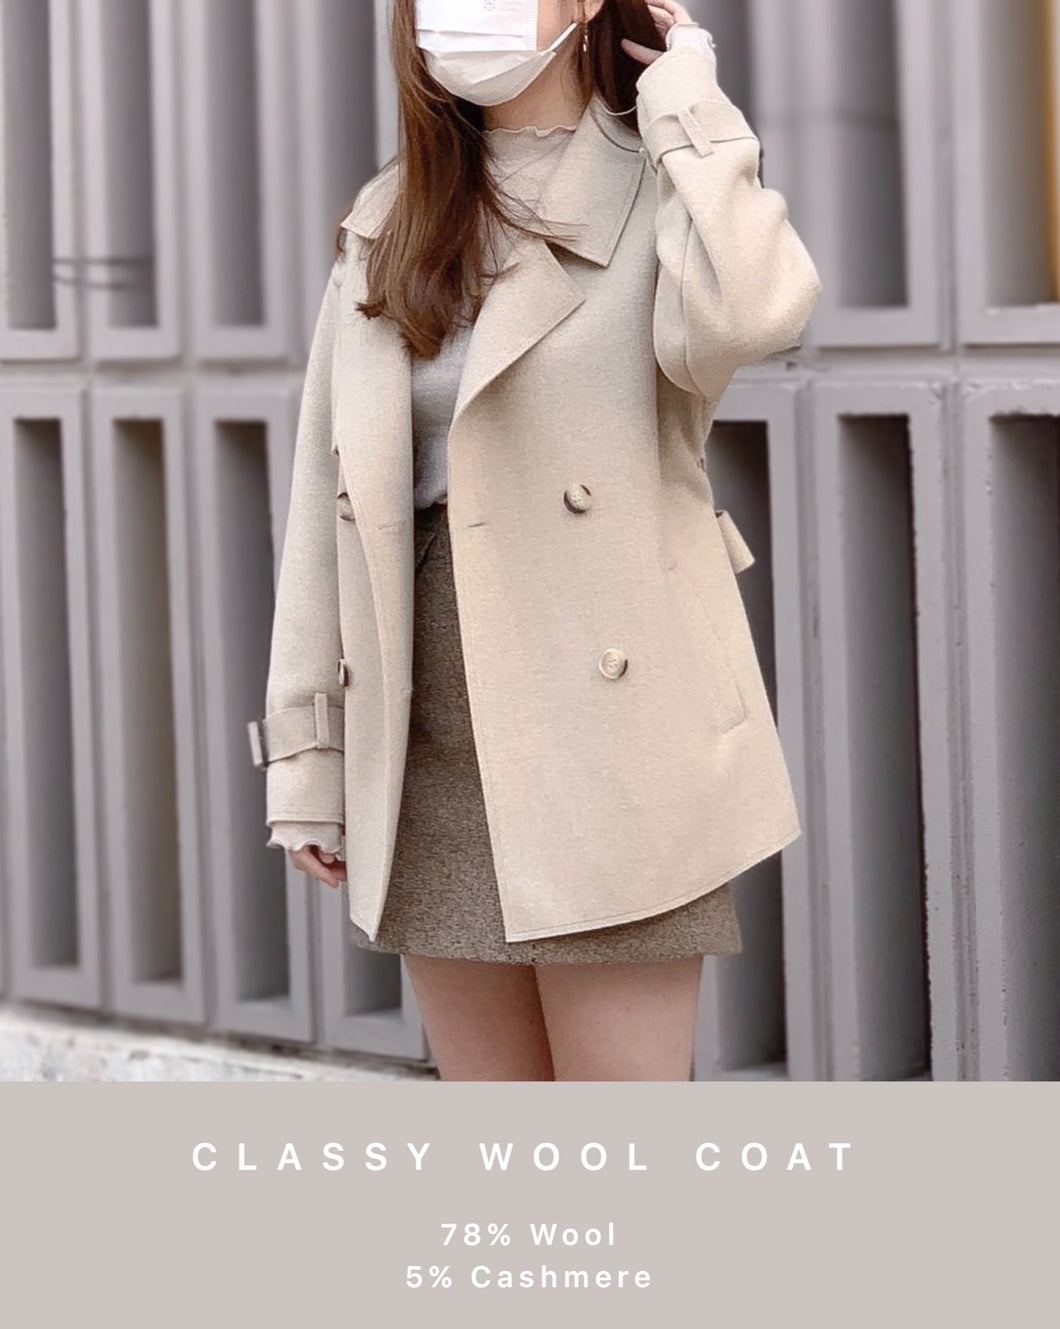 Classy Wool Coat